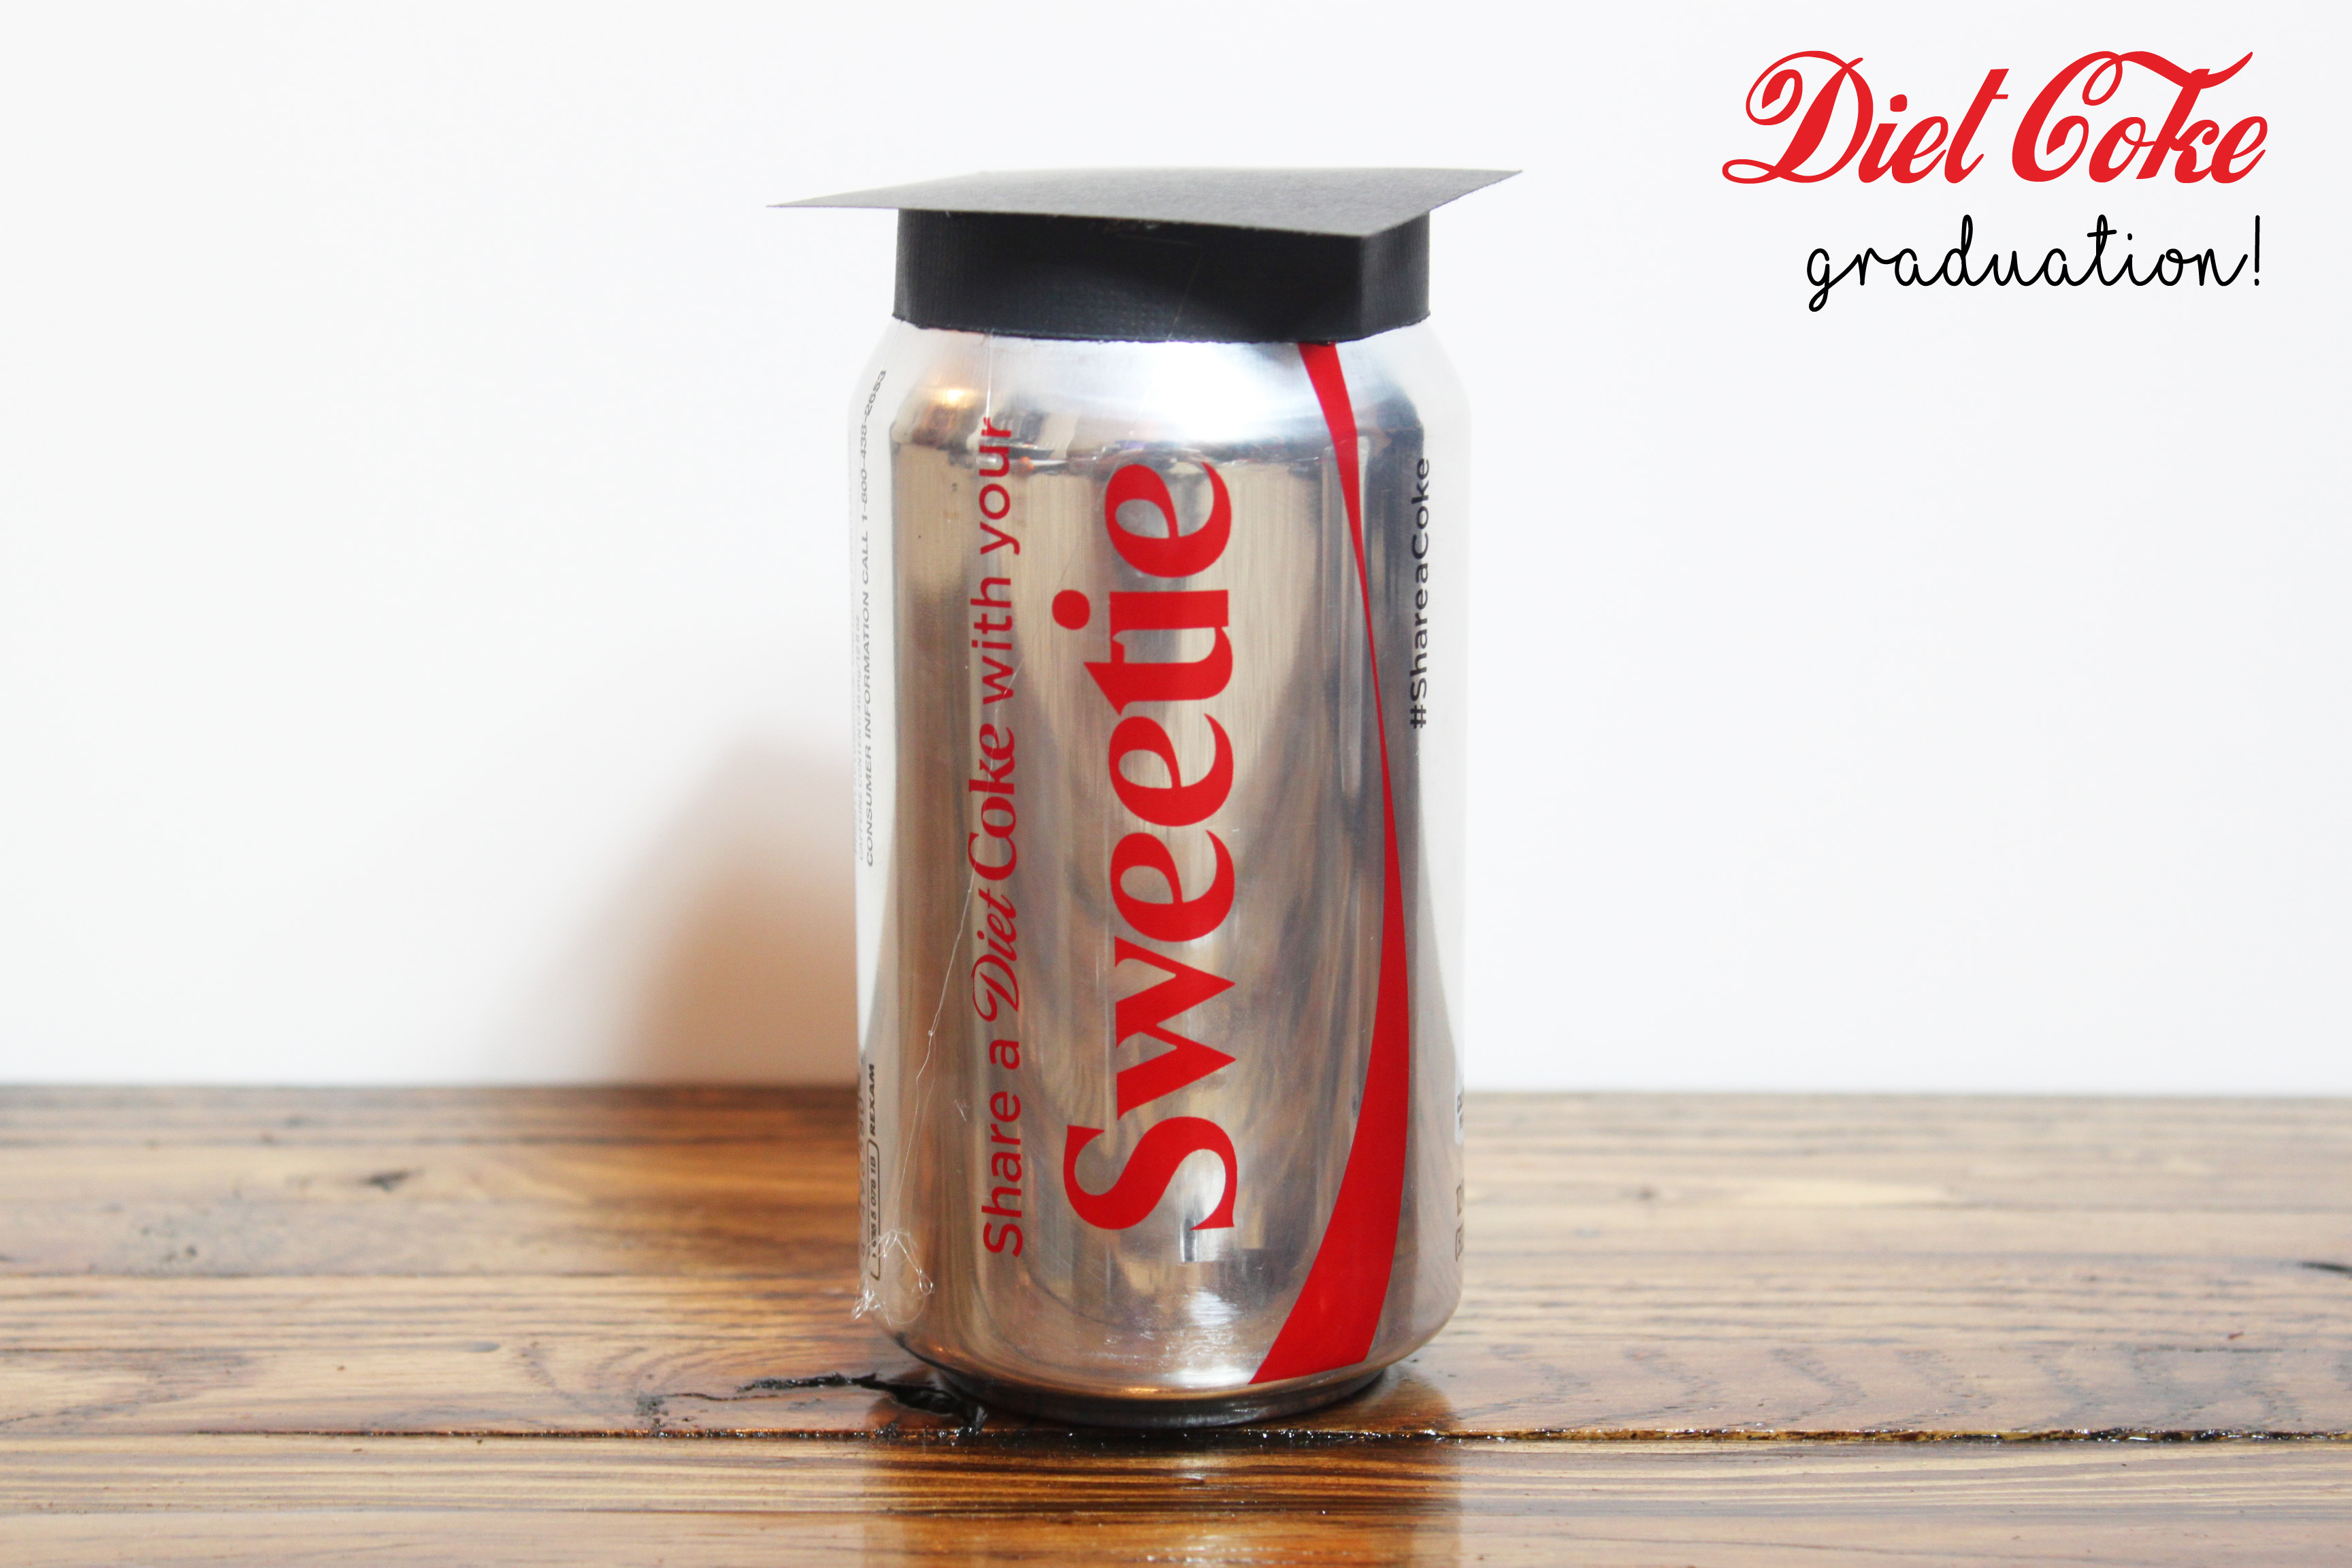 Diet Coke New Graduation 2